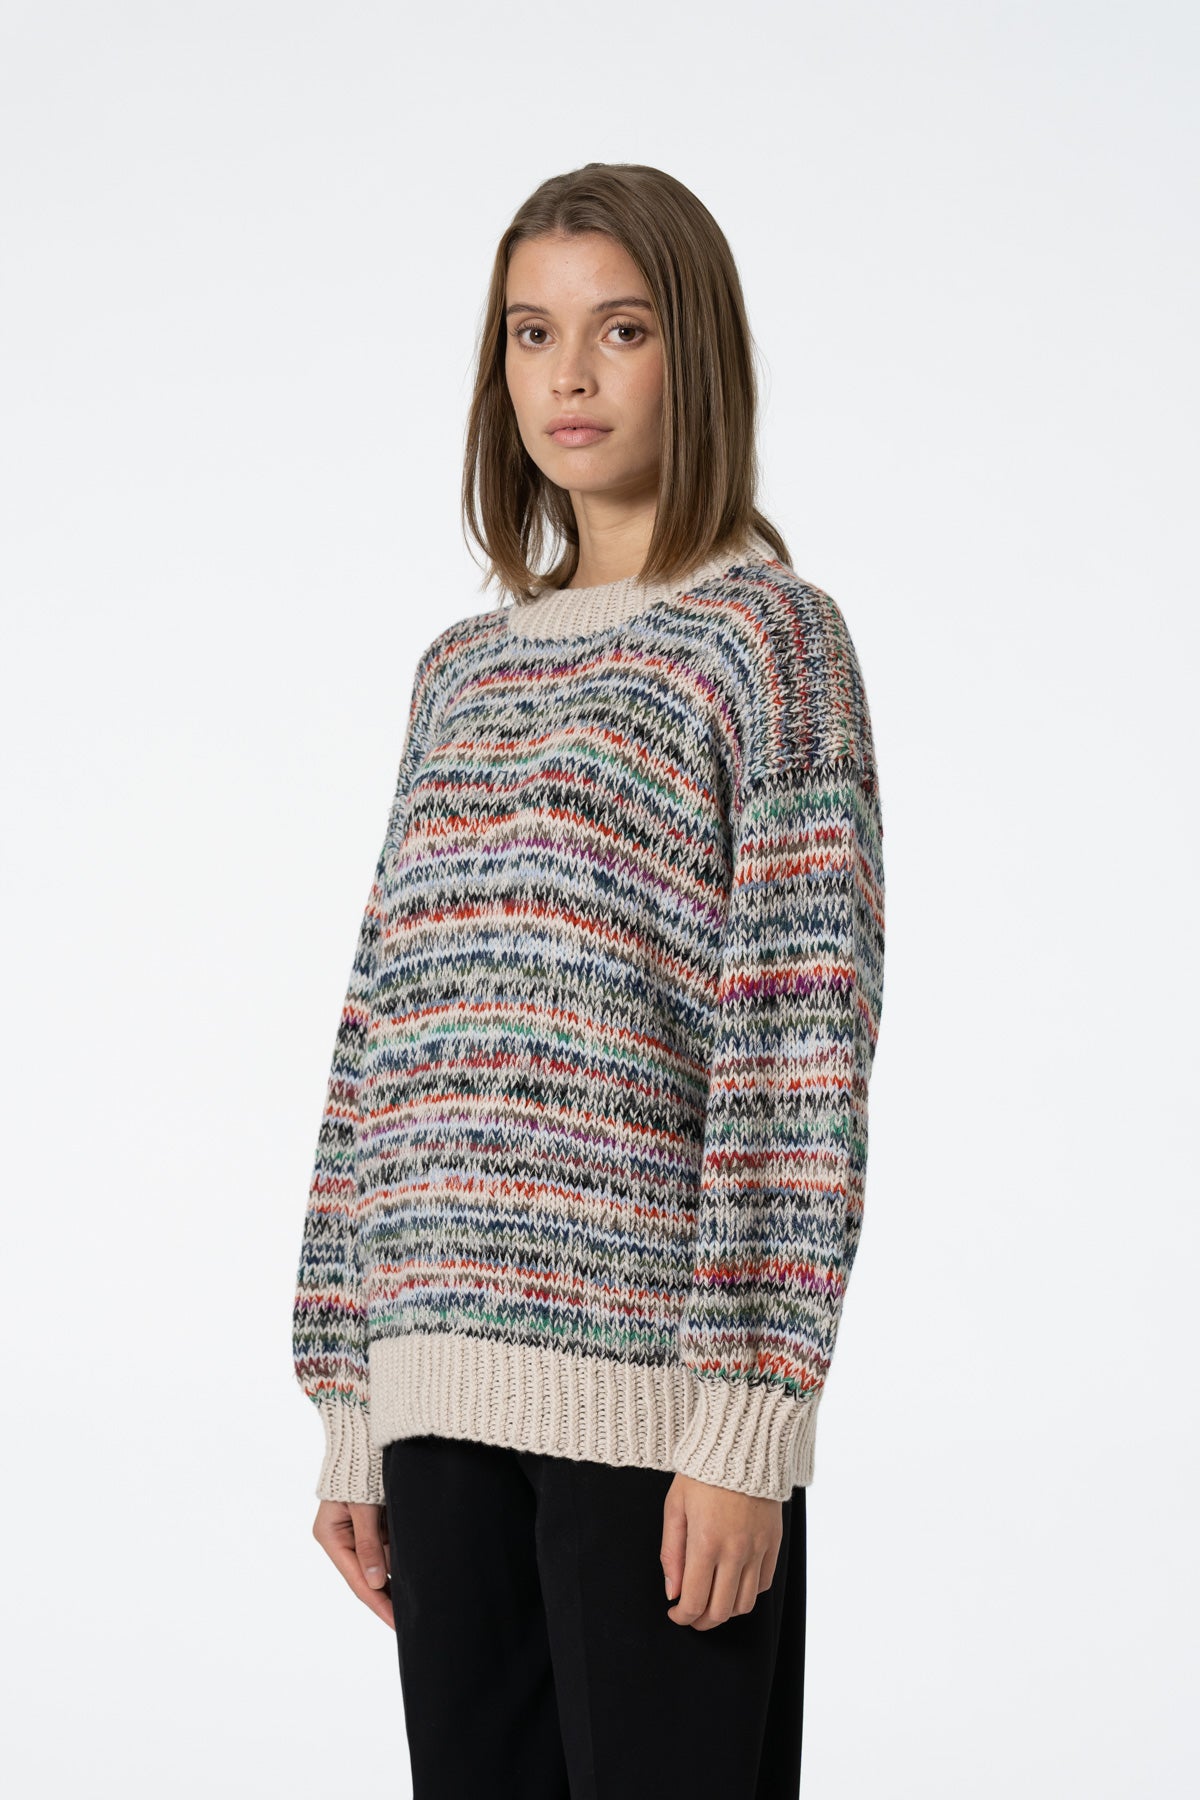 Dinadi Merino Handknit Zero-Waste Sweater in Multi Almond Fall 23/24